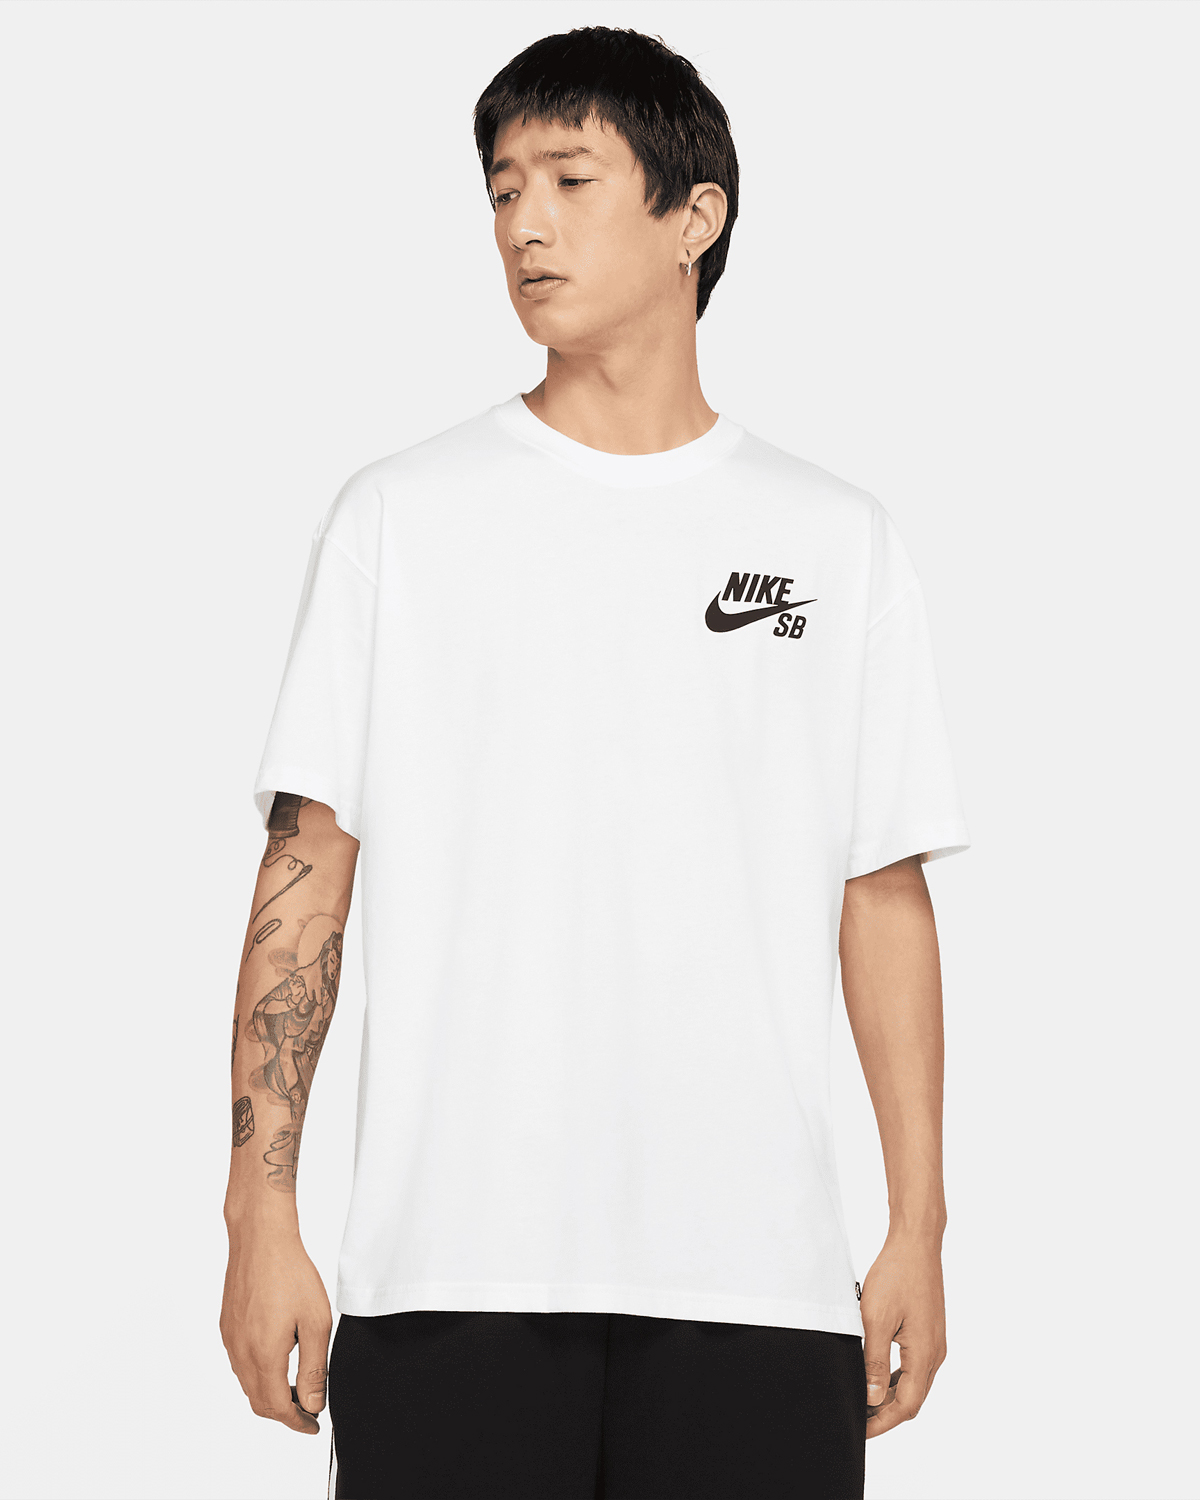 Nike-SB-Logo-T-Shirt-White-Black